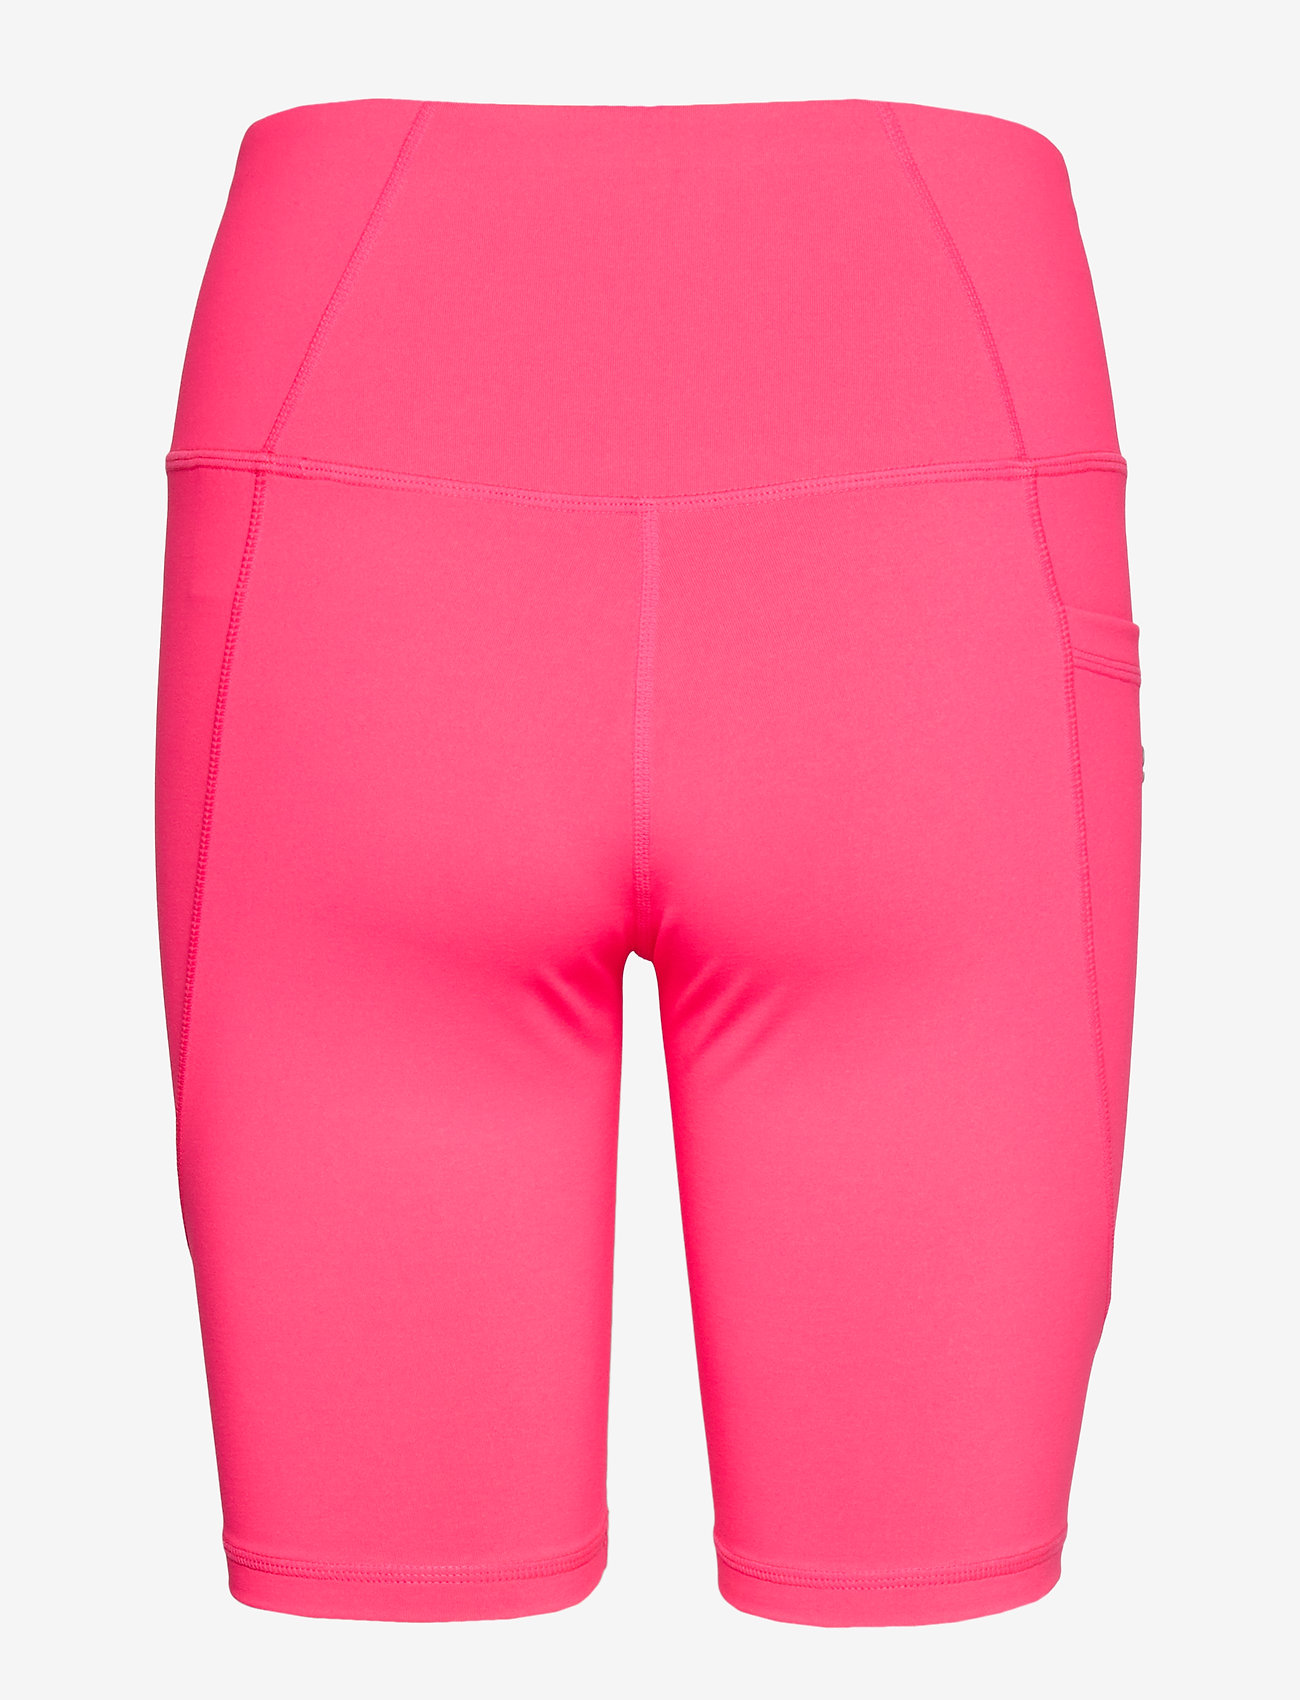 Svea - Svea Sport Shorts - training shorts - neon pink - 1